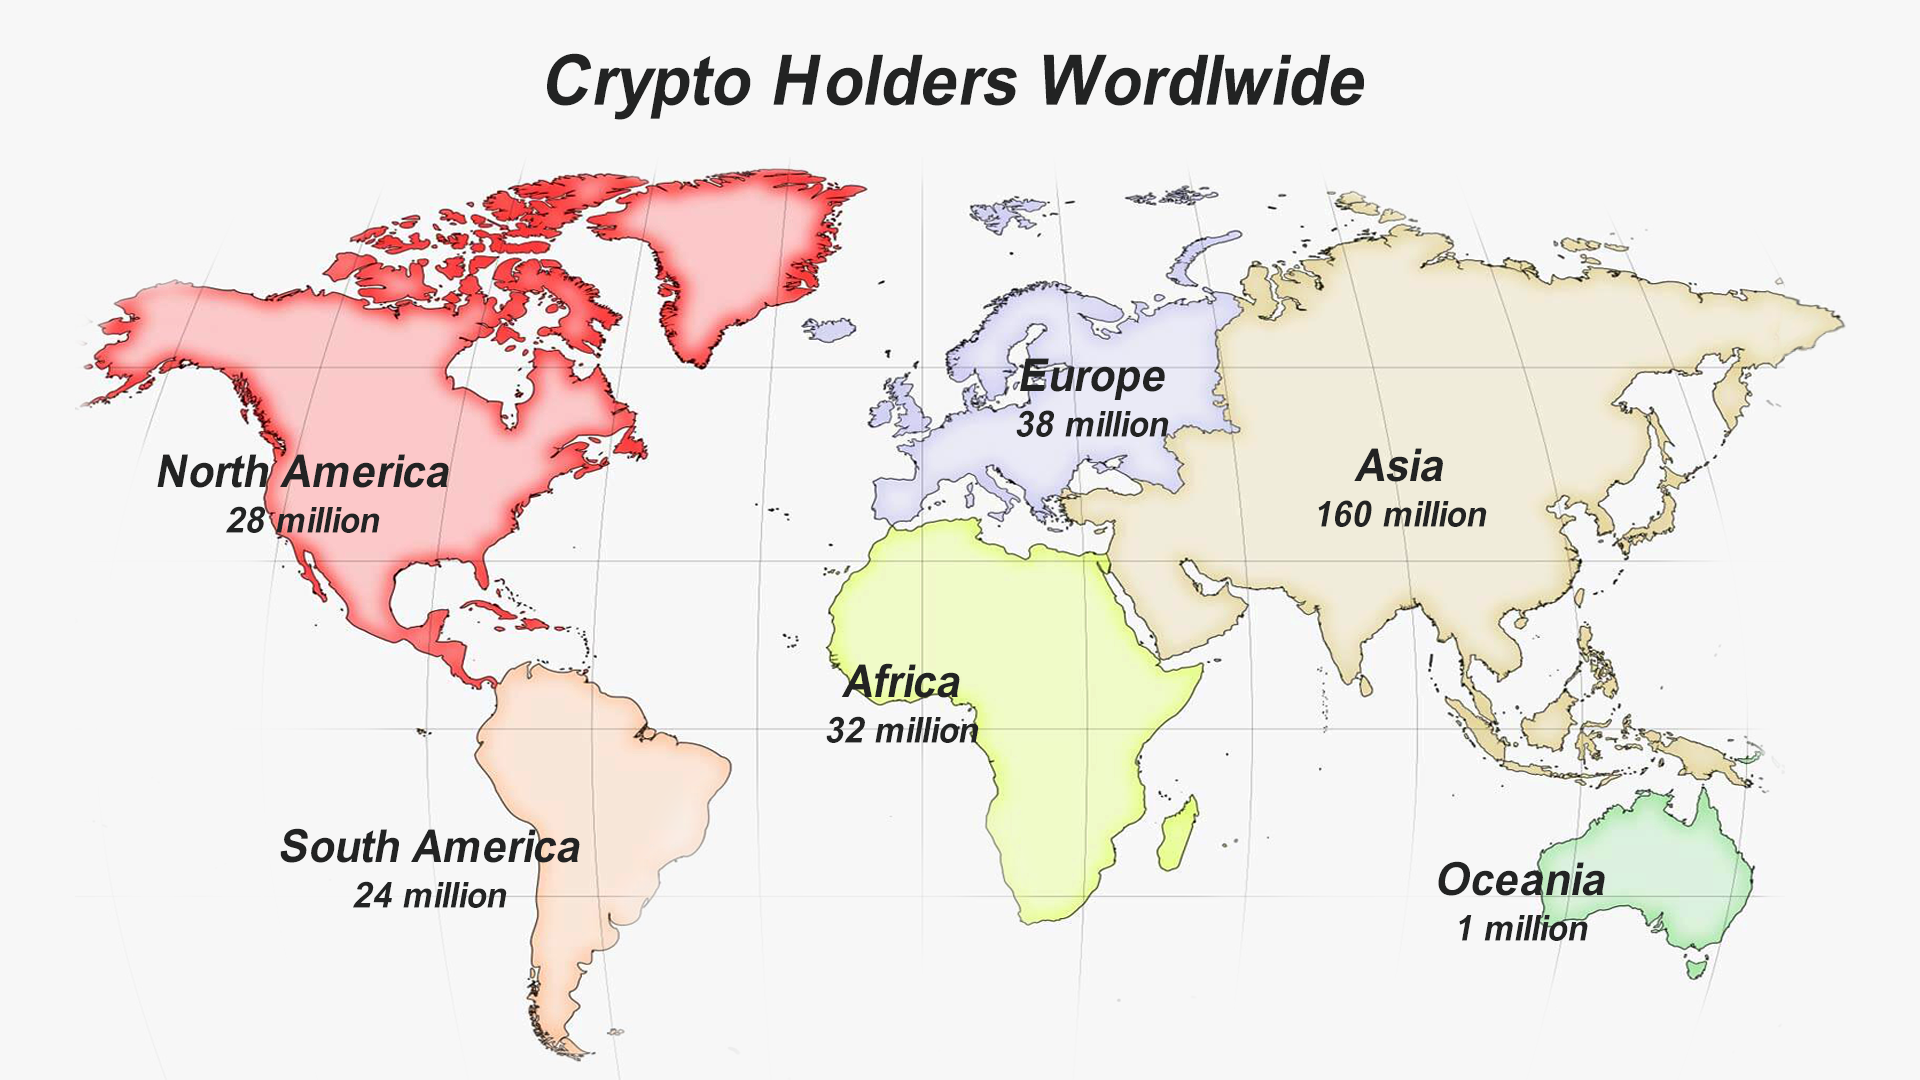 Crypto holders worldwide